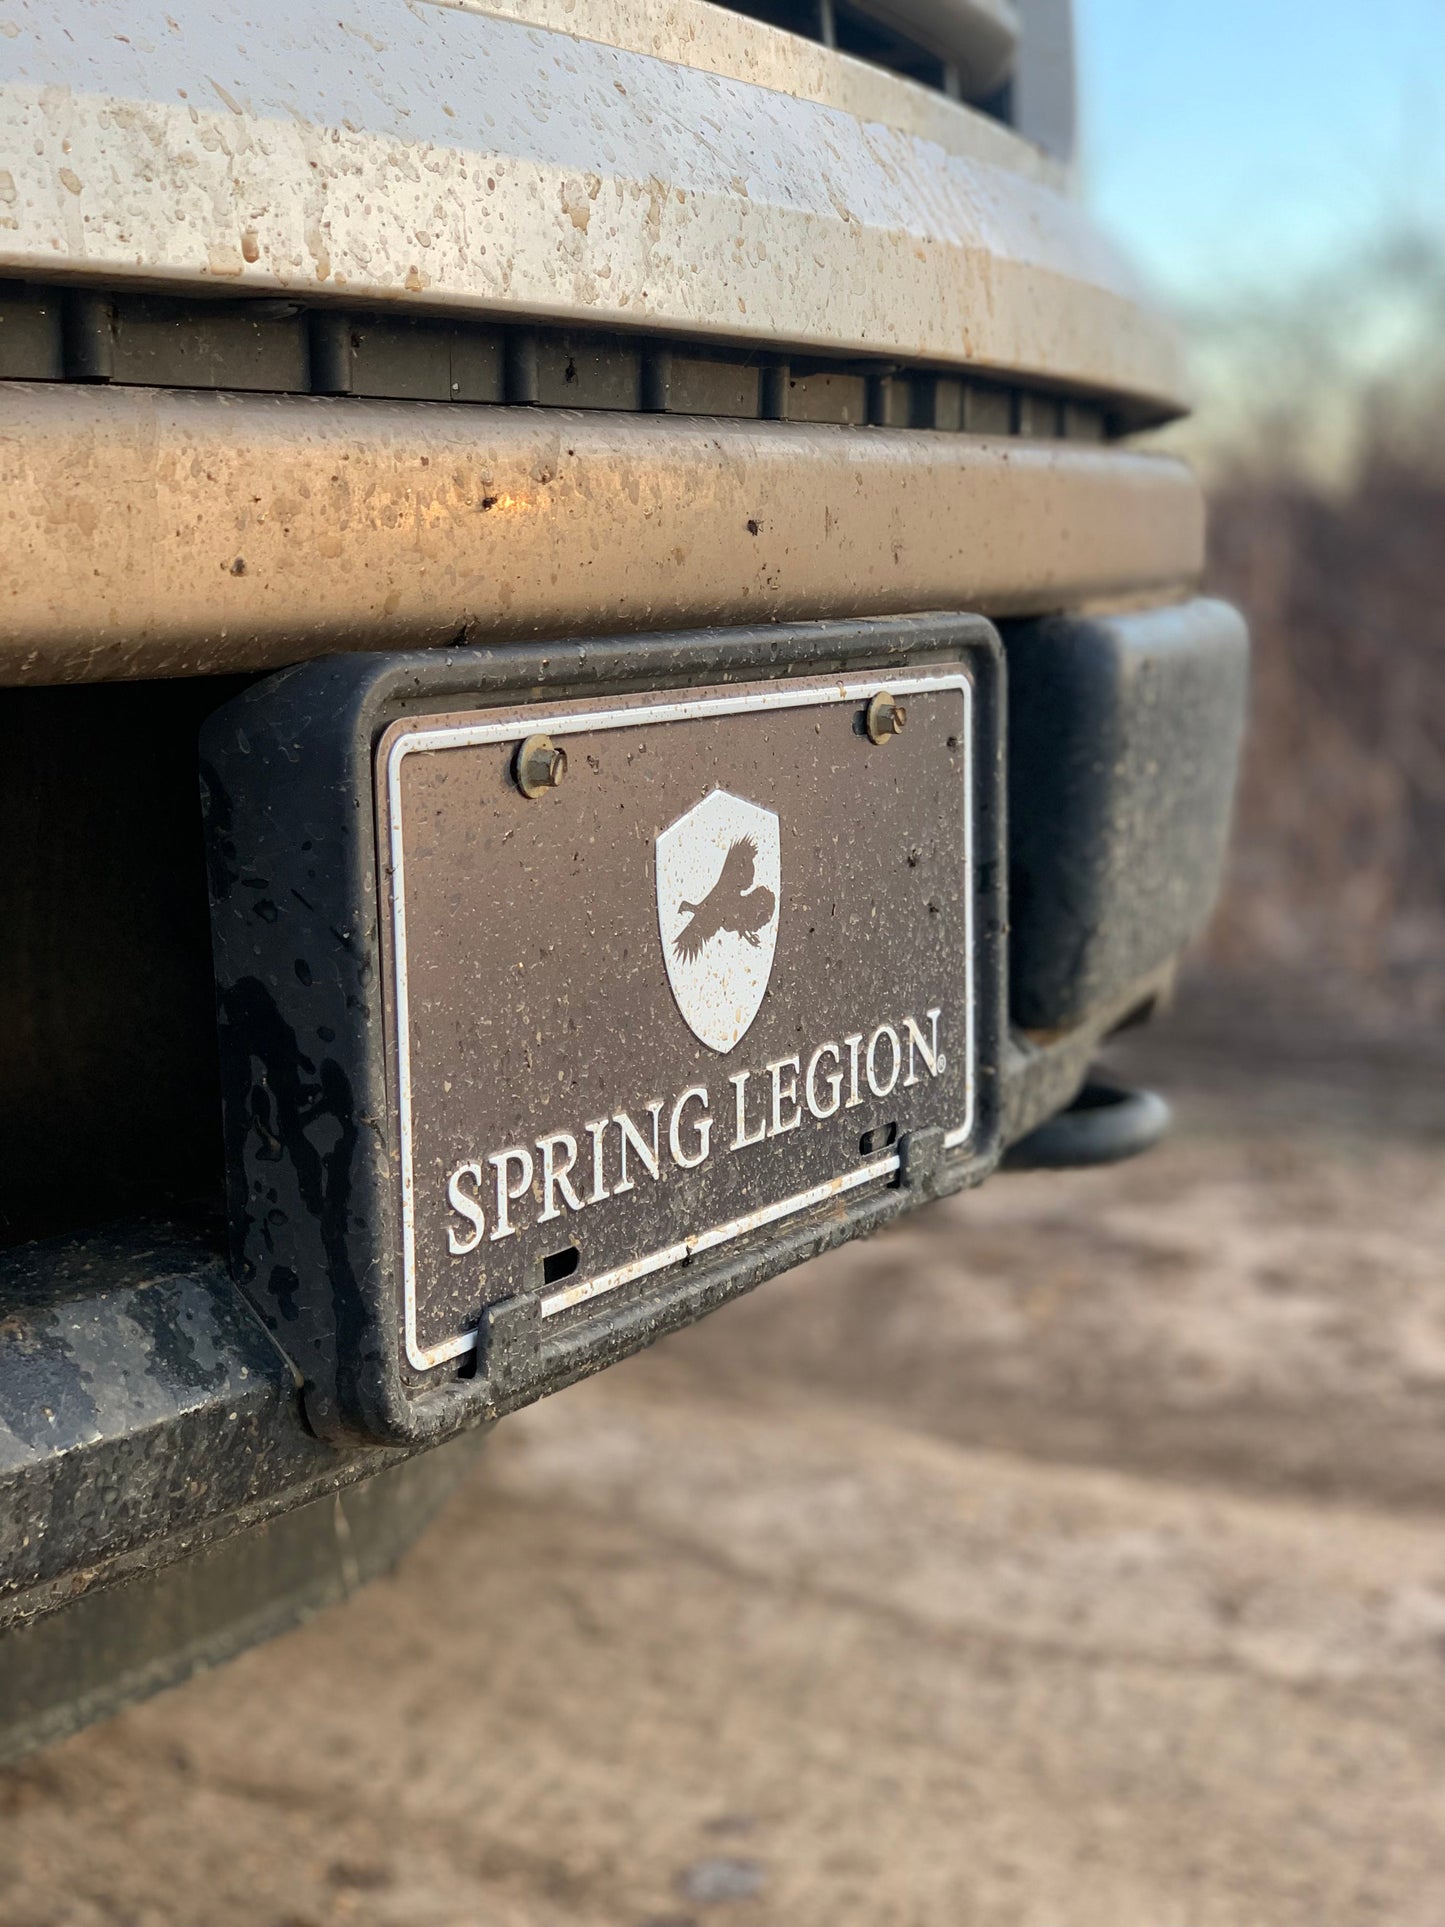 Spring Legion License Plate - Green